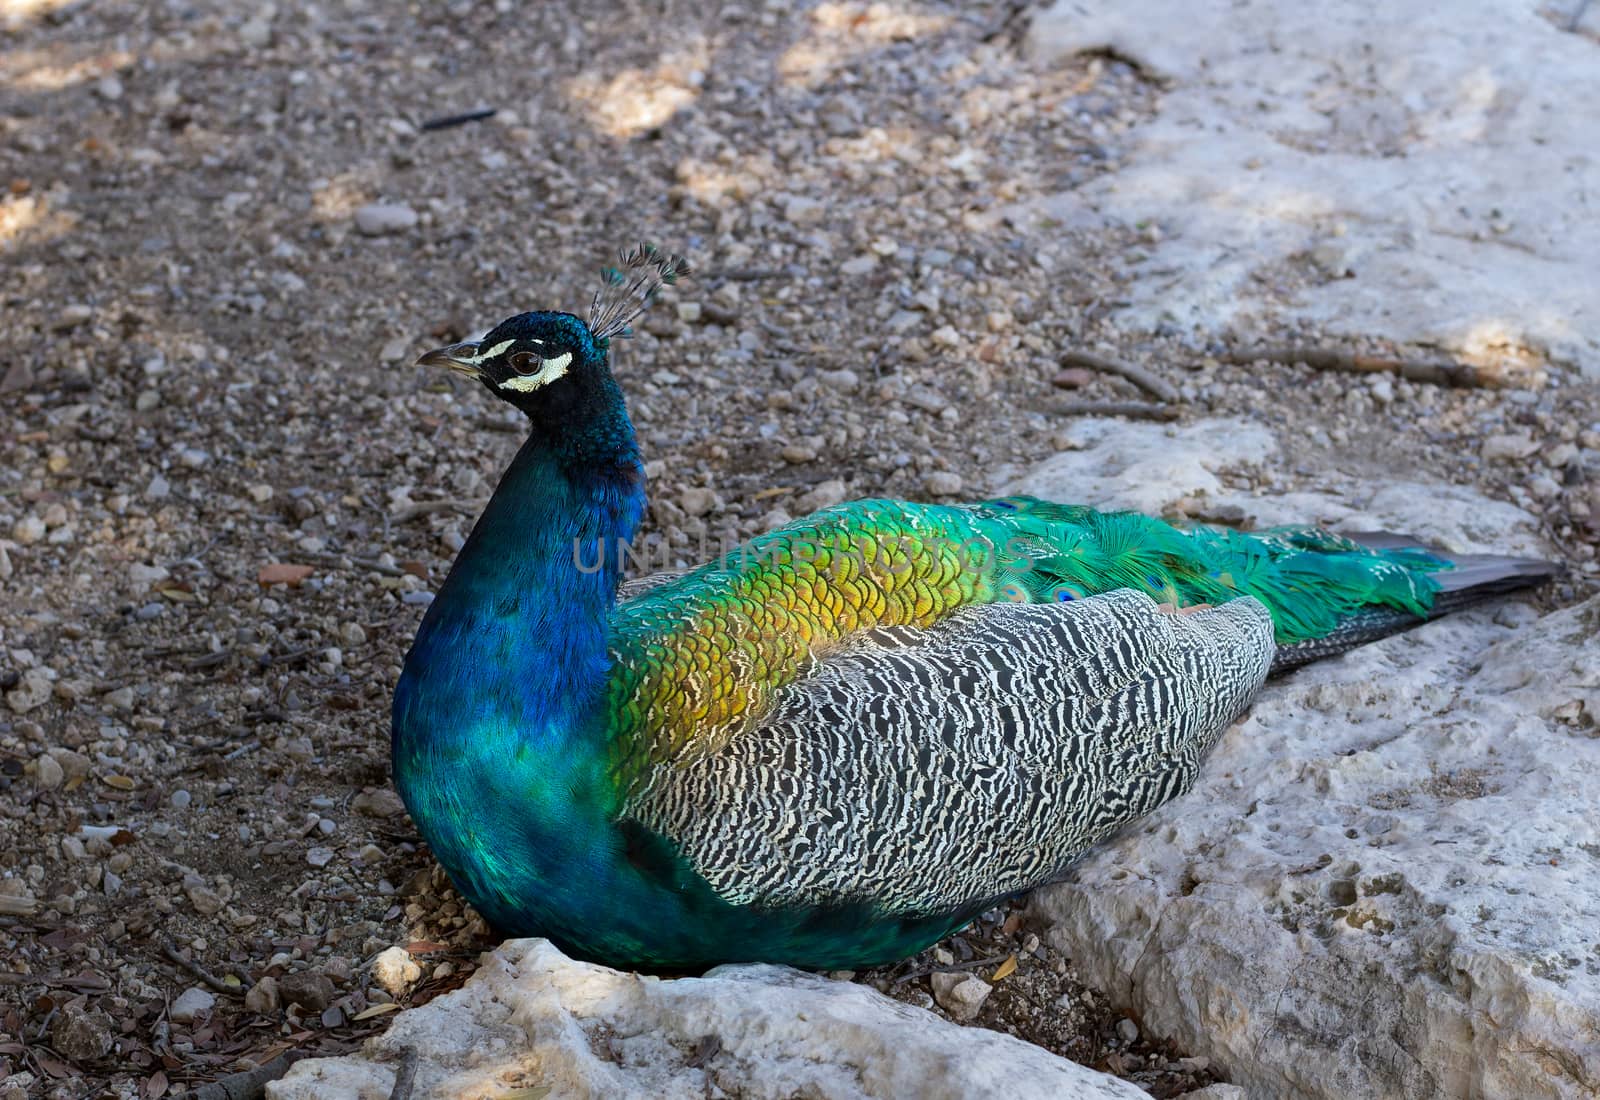 Colourful blue multicolored peacock sitting in rocks close up by VeraVerano